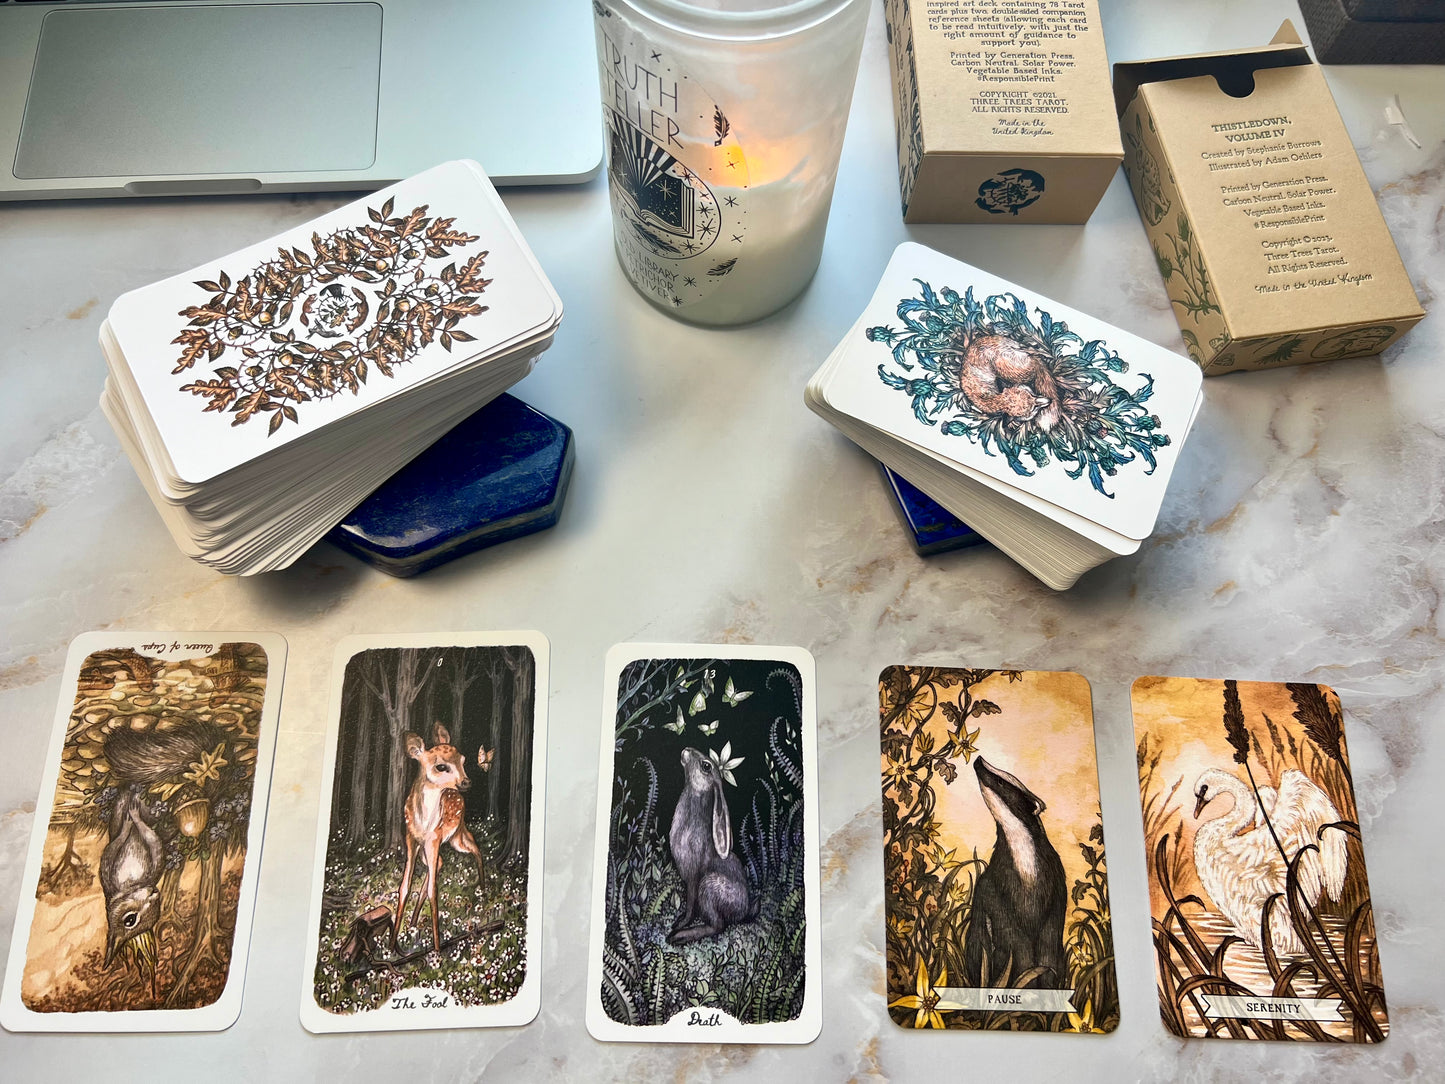 6 Card Tarot Reading: Pick Your Deck